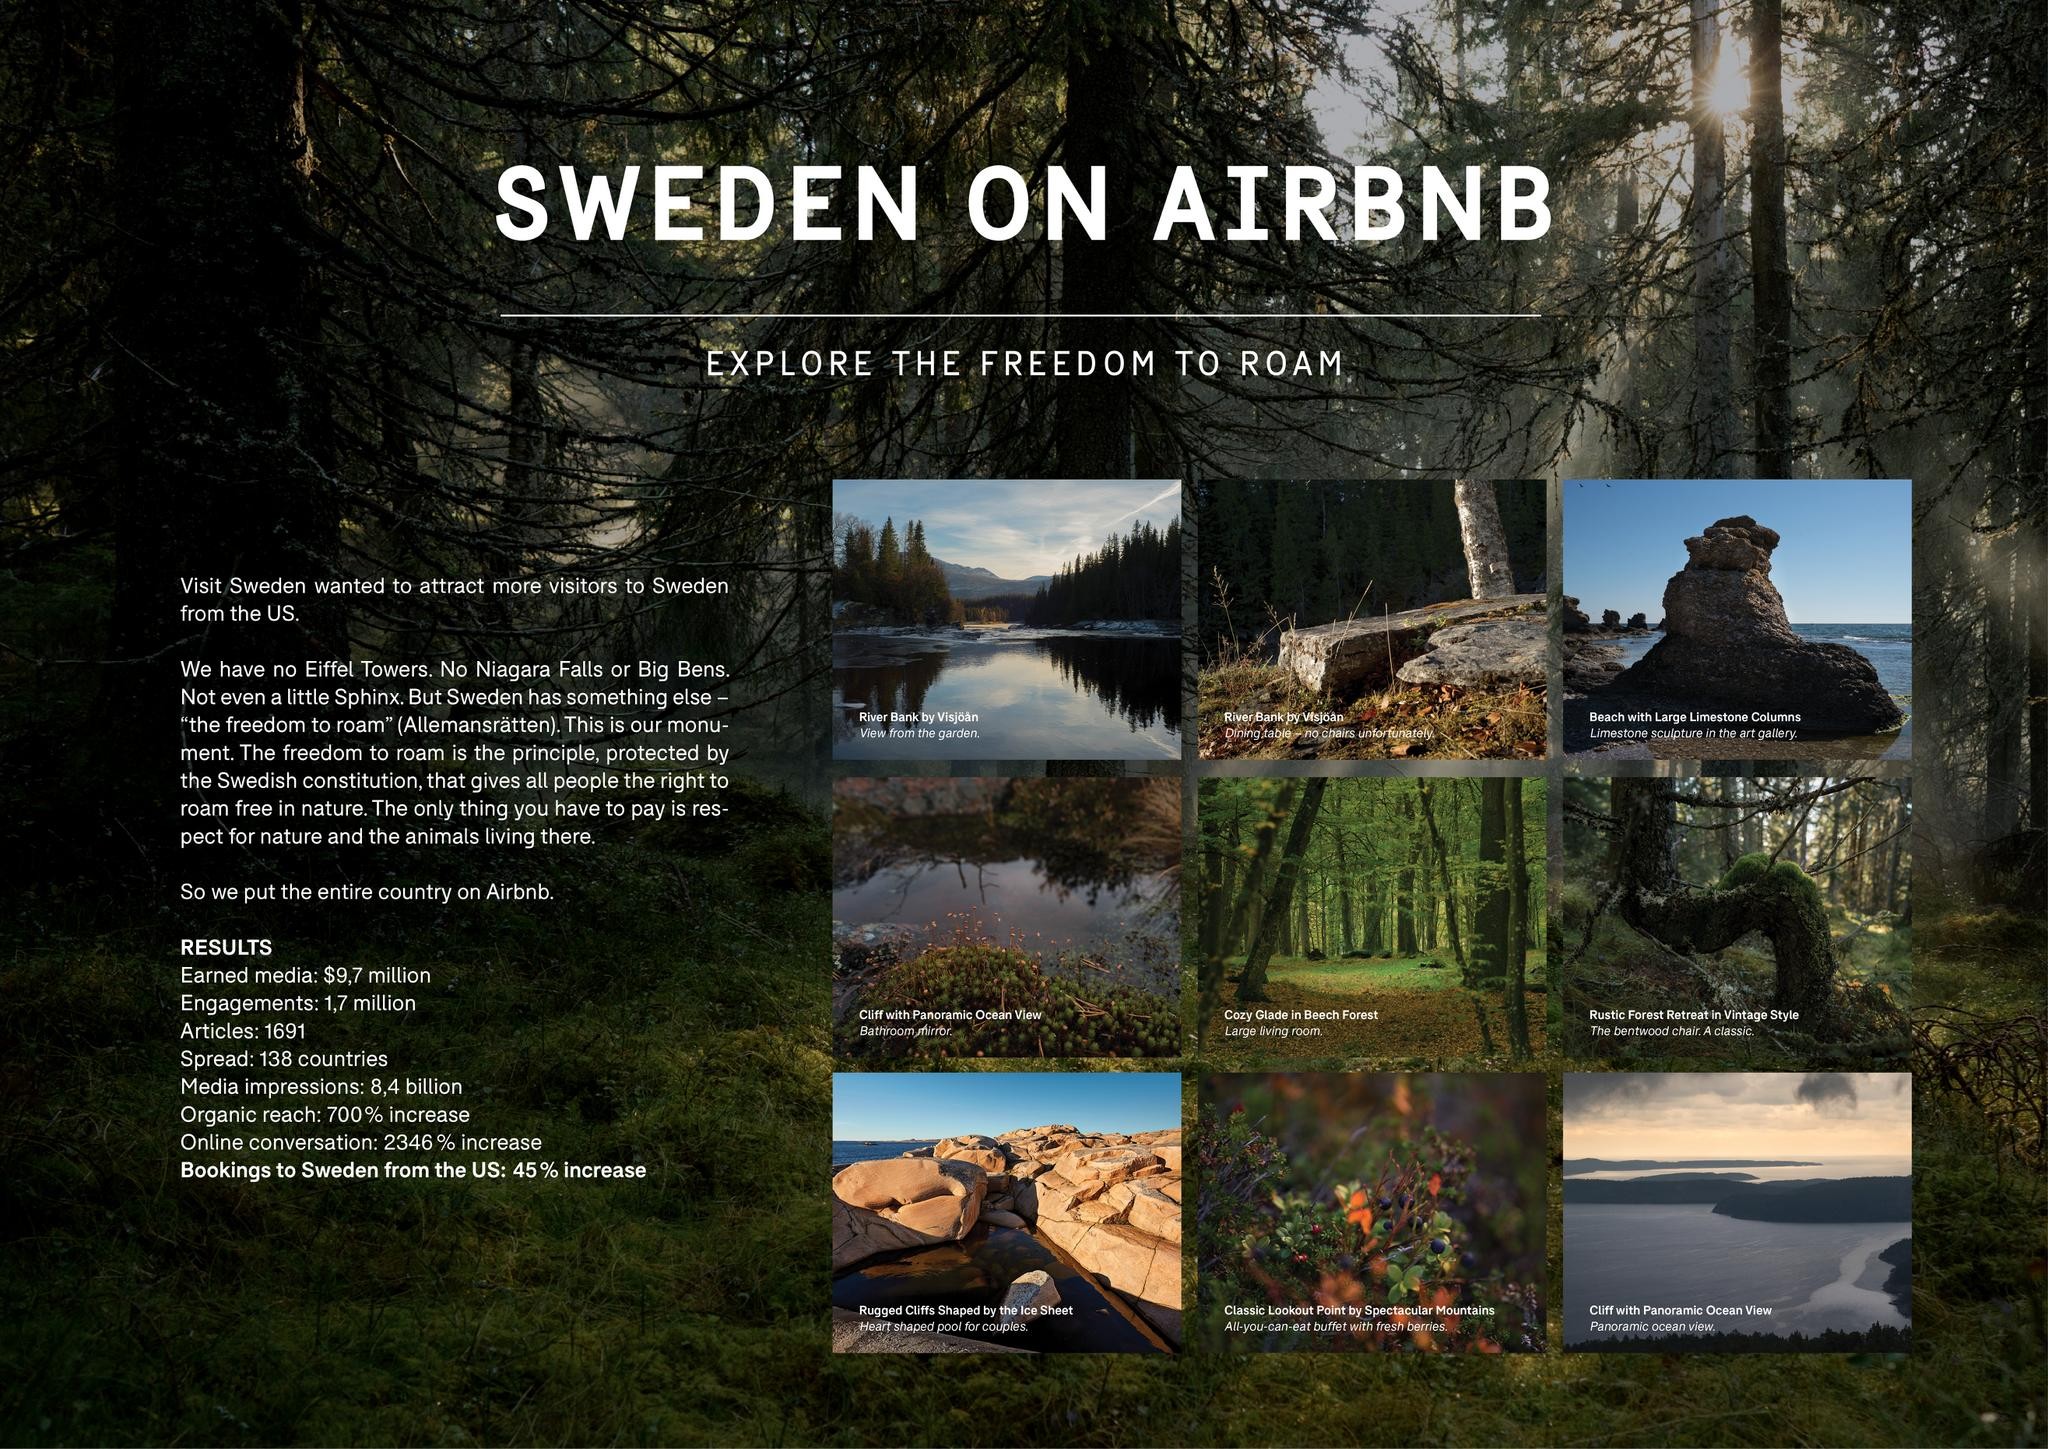 Sweden on Airbnb